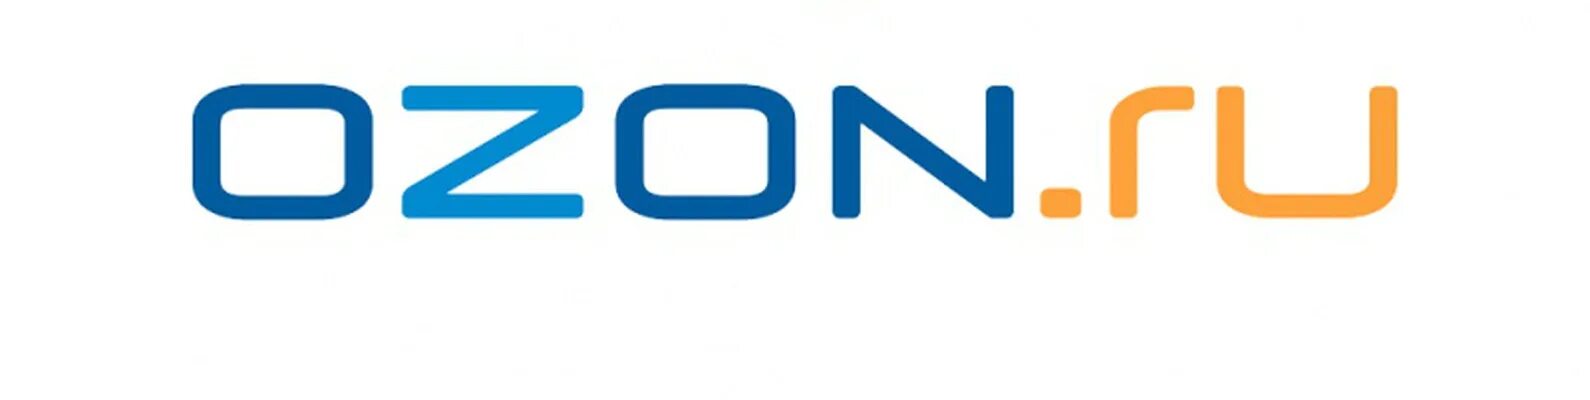 Озон казахстан усть каменогорск. Озон логотип. Магазин Озон логотип. Озон ру. OZON логотип PNG.